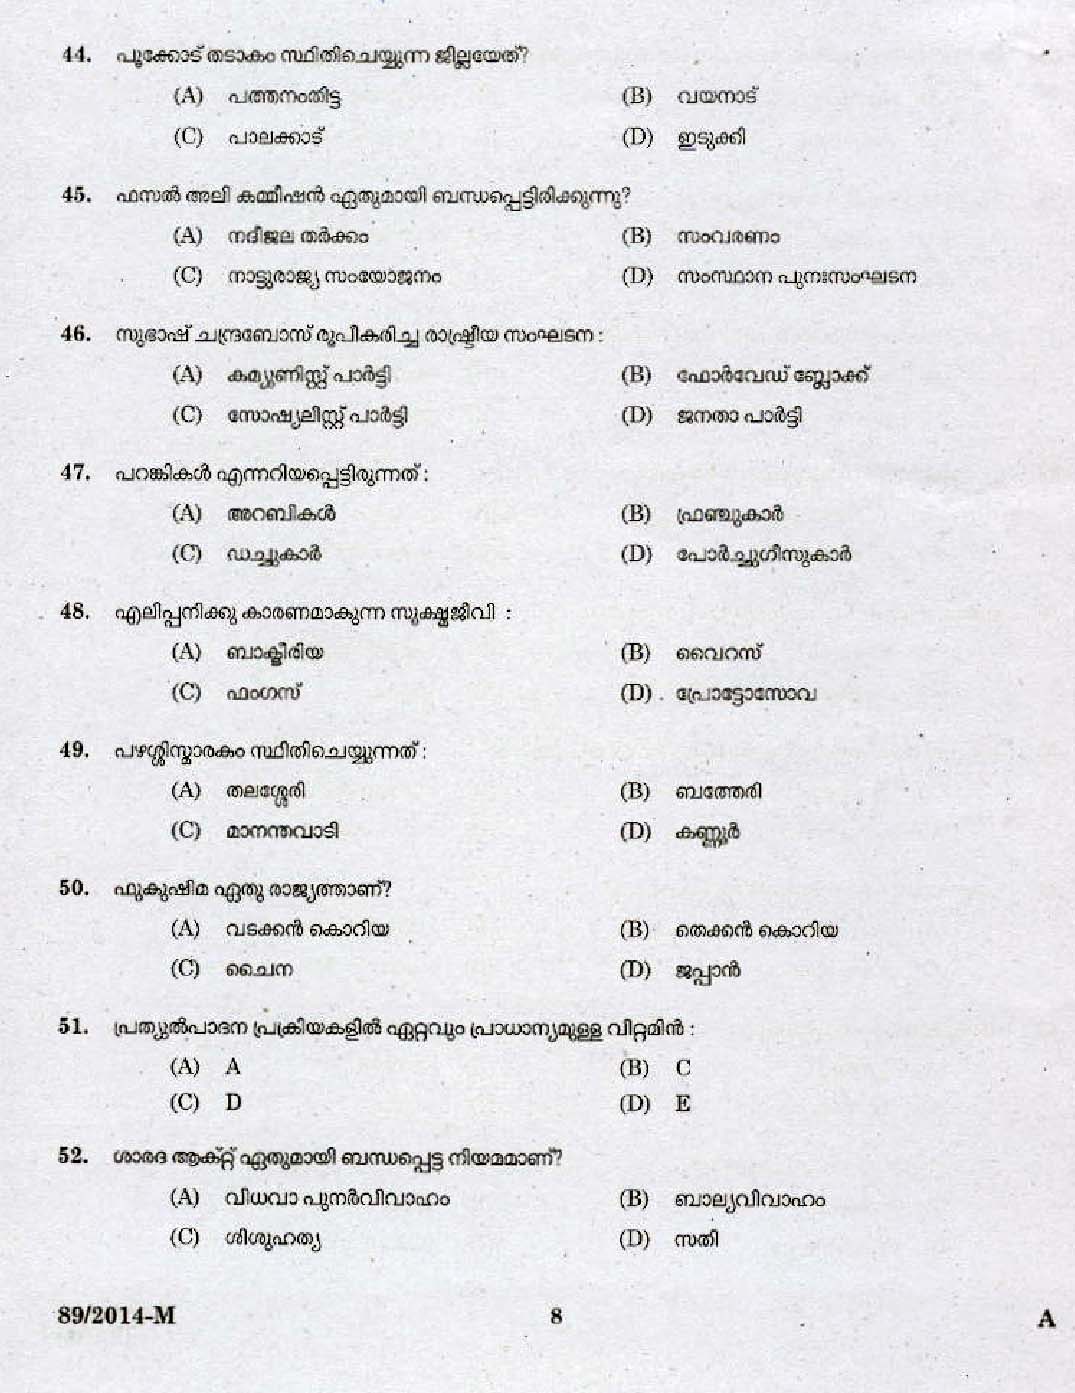 Kerala PSC Attender Exam 2014 Question Paper Code 892014 M 6